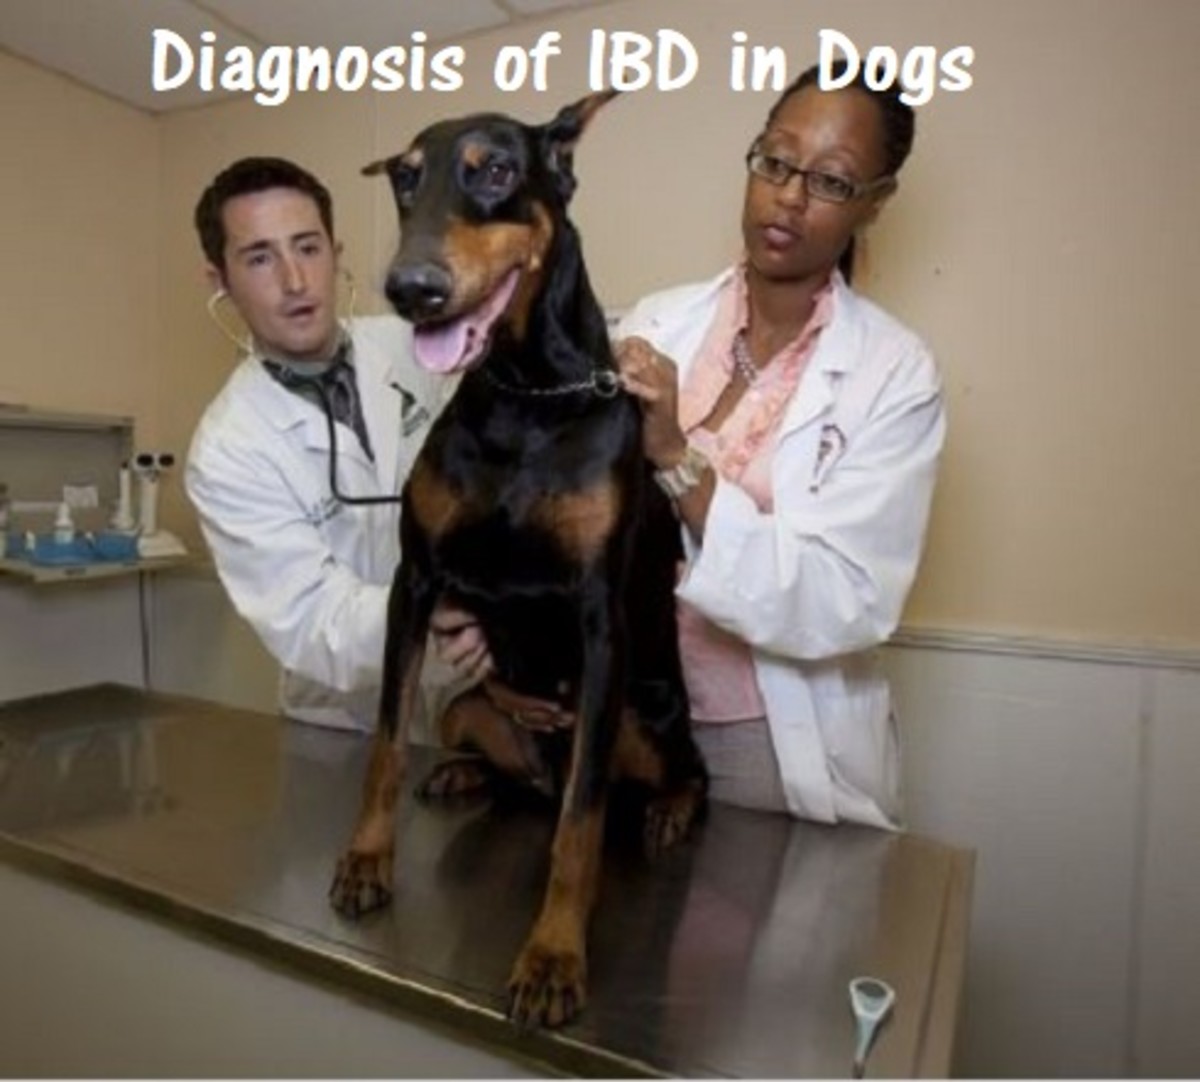 Diagnosis of IBD in Dogs (Inflammatory Bowel Disease)